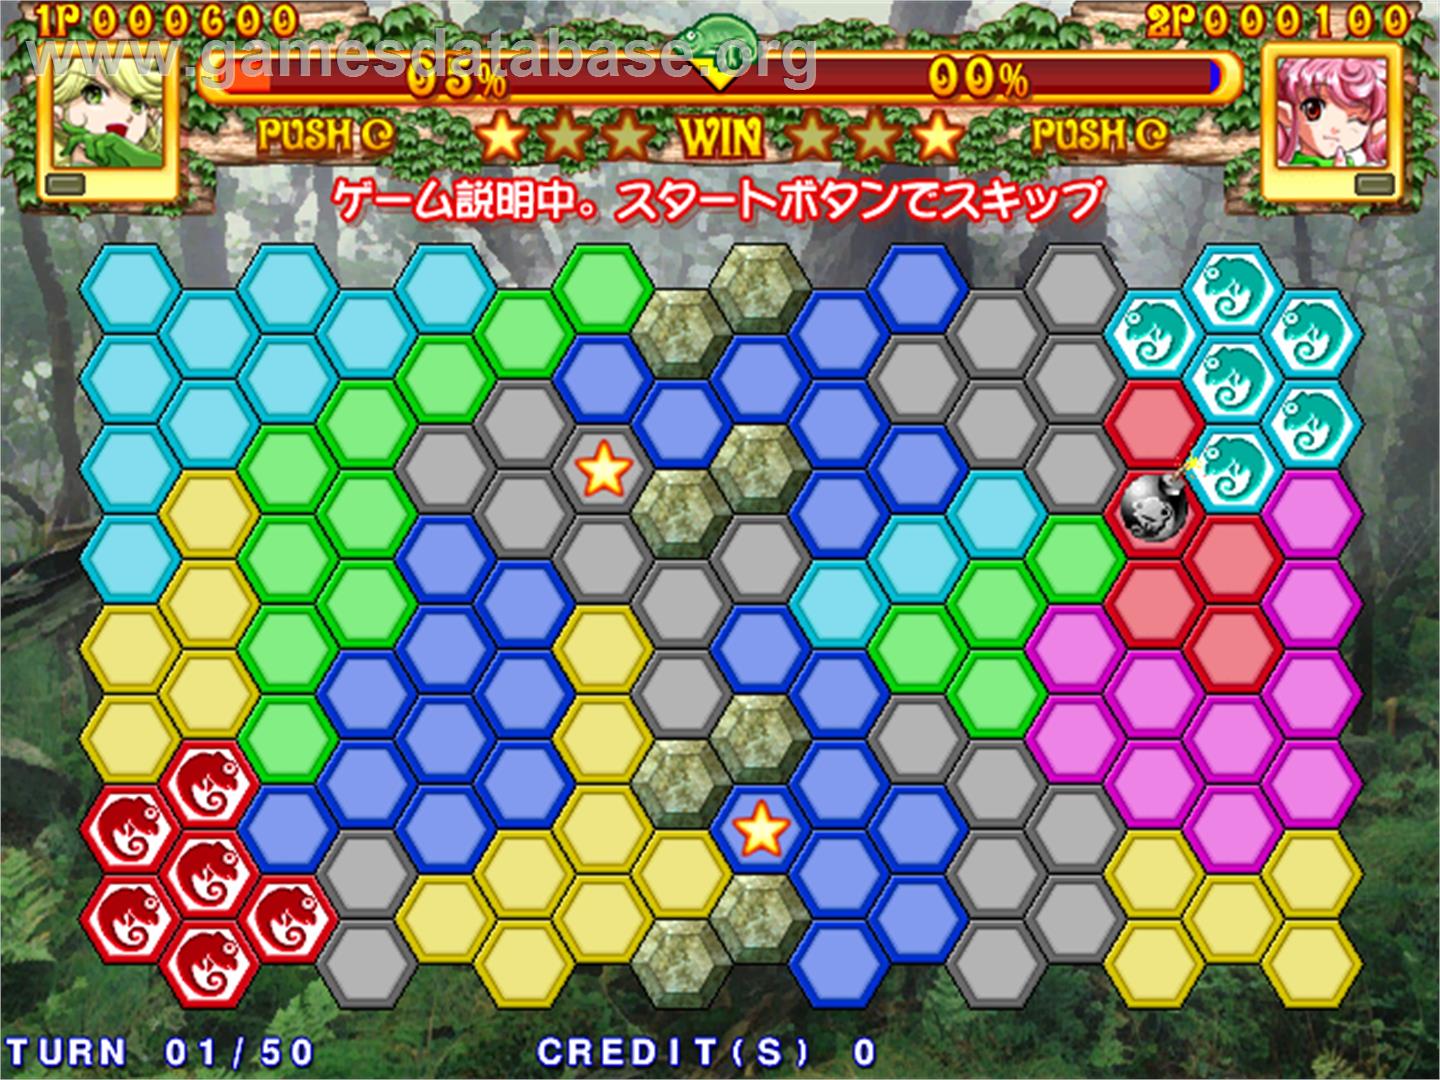 Kurukuru Chameleon - Arcade - Artwork - In Game